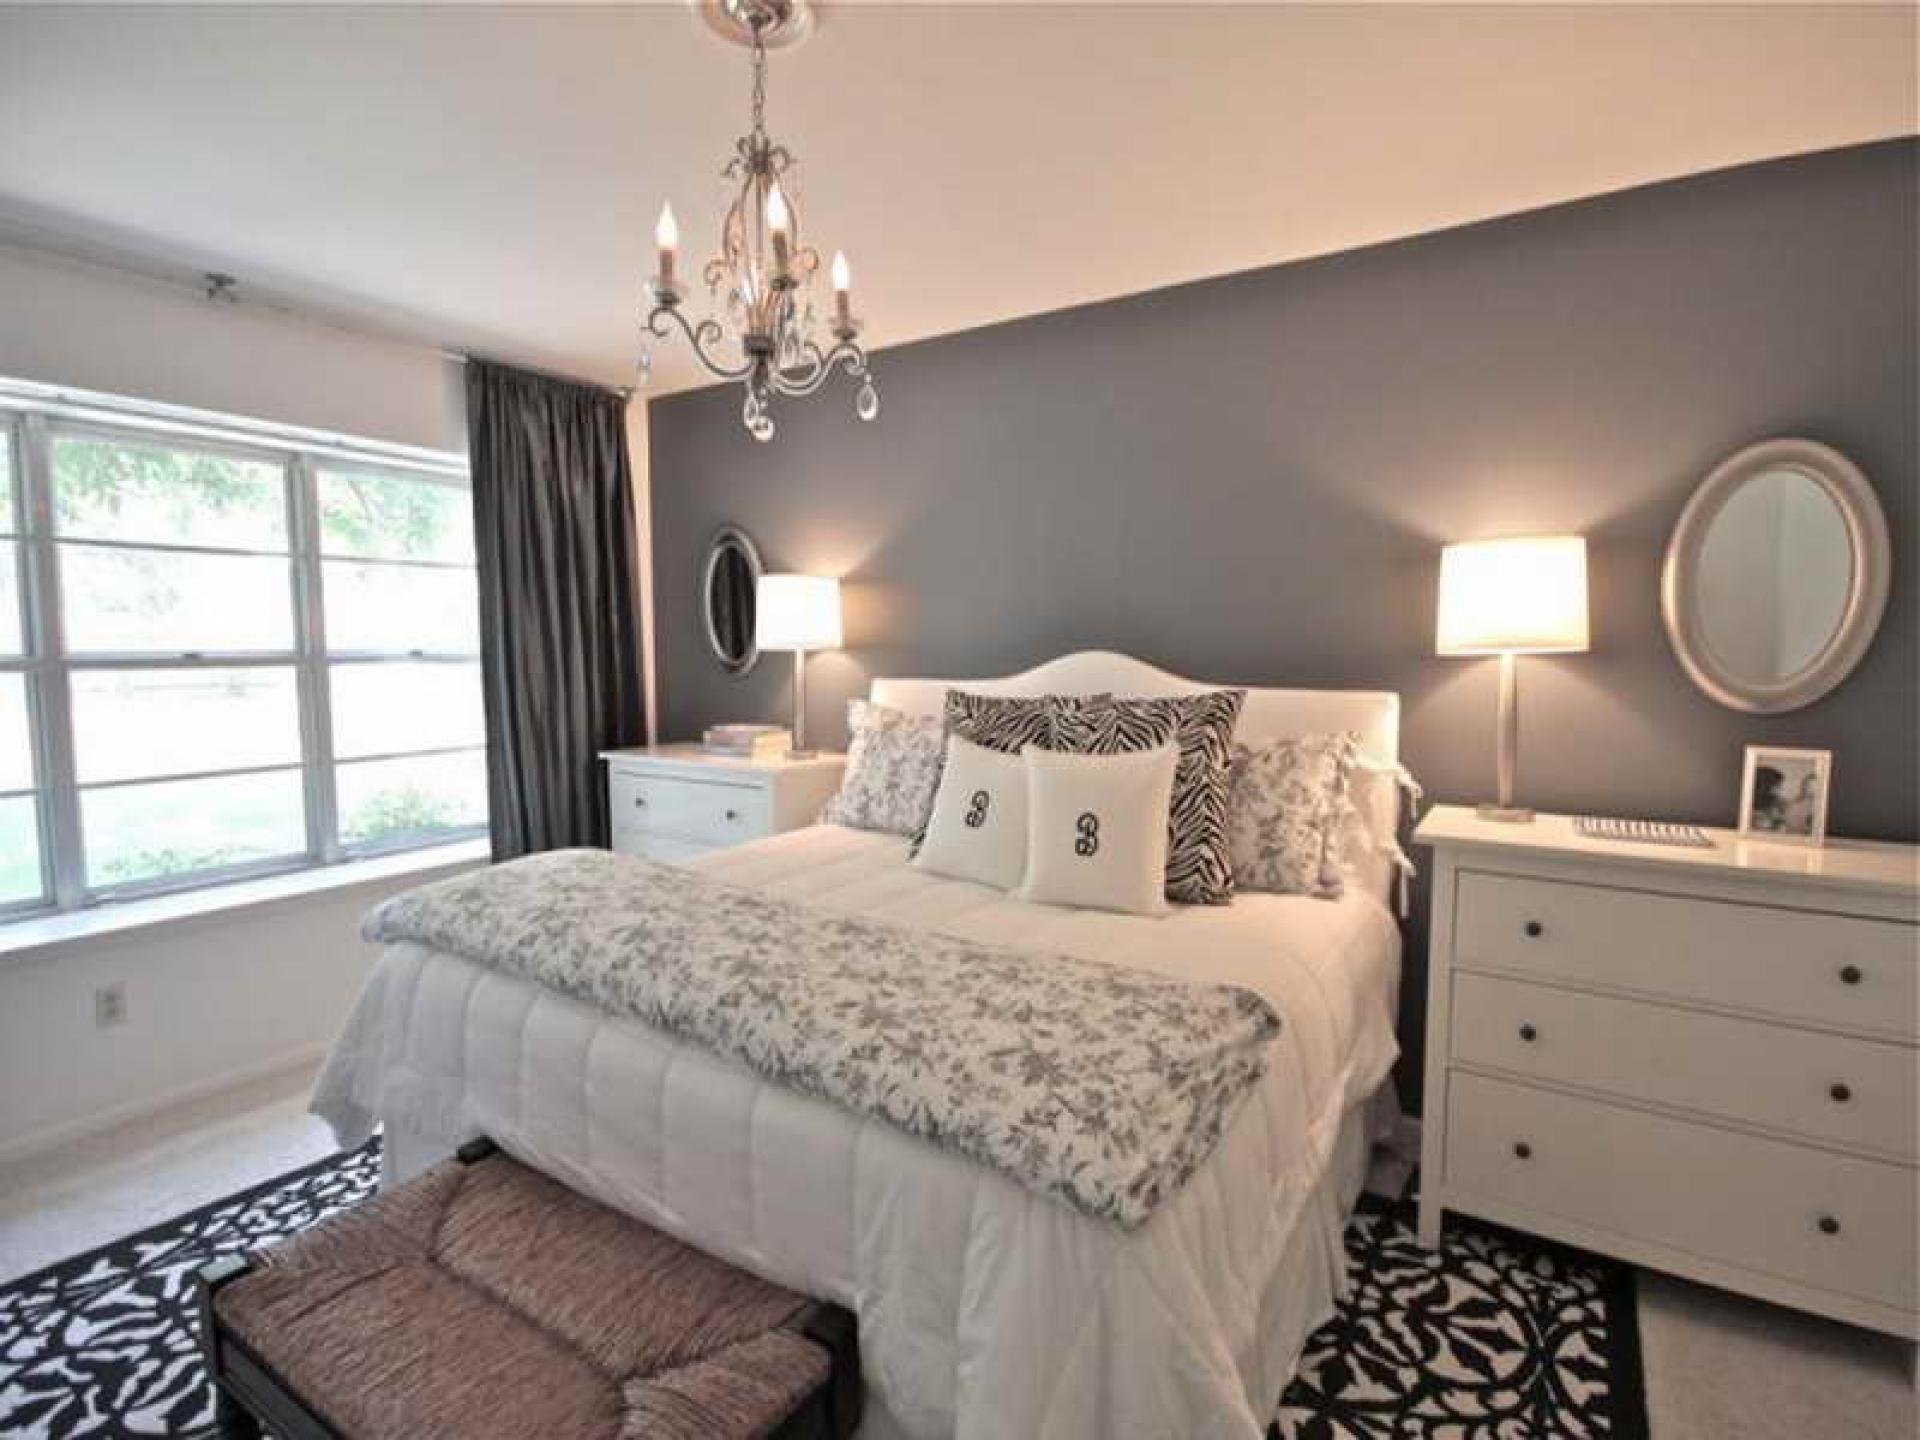 Black and grey bedroom furniture